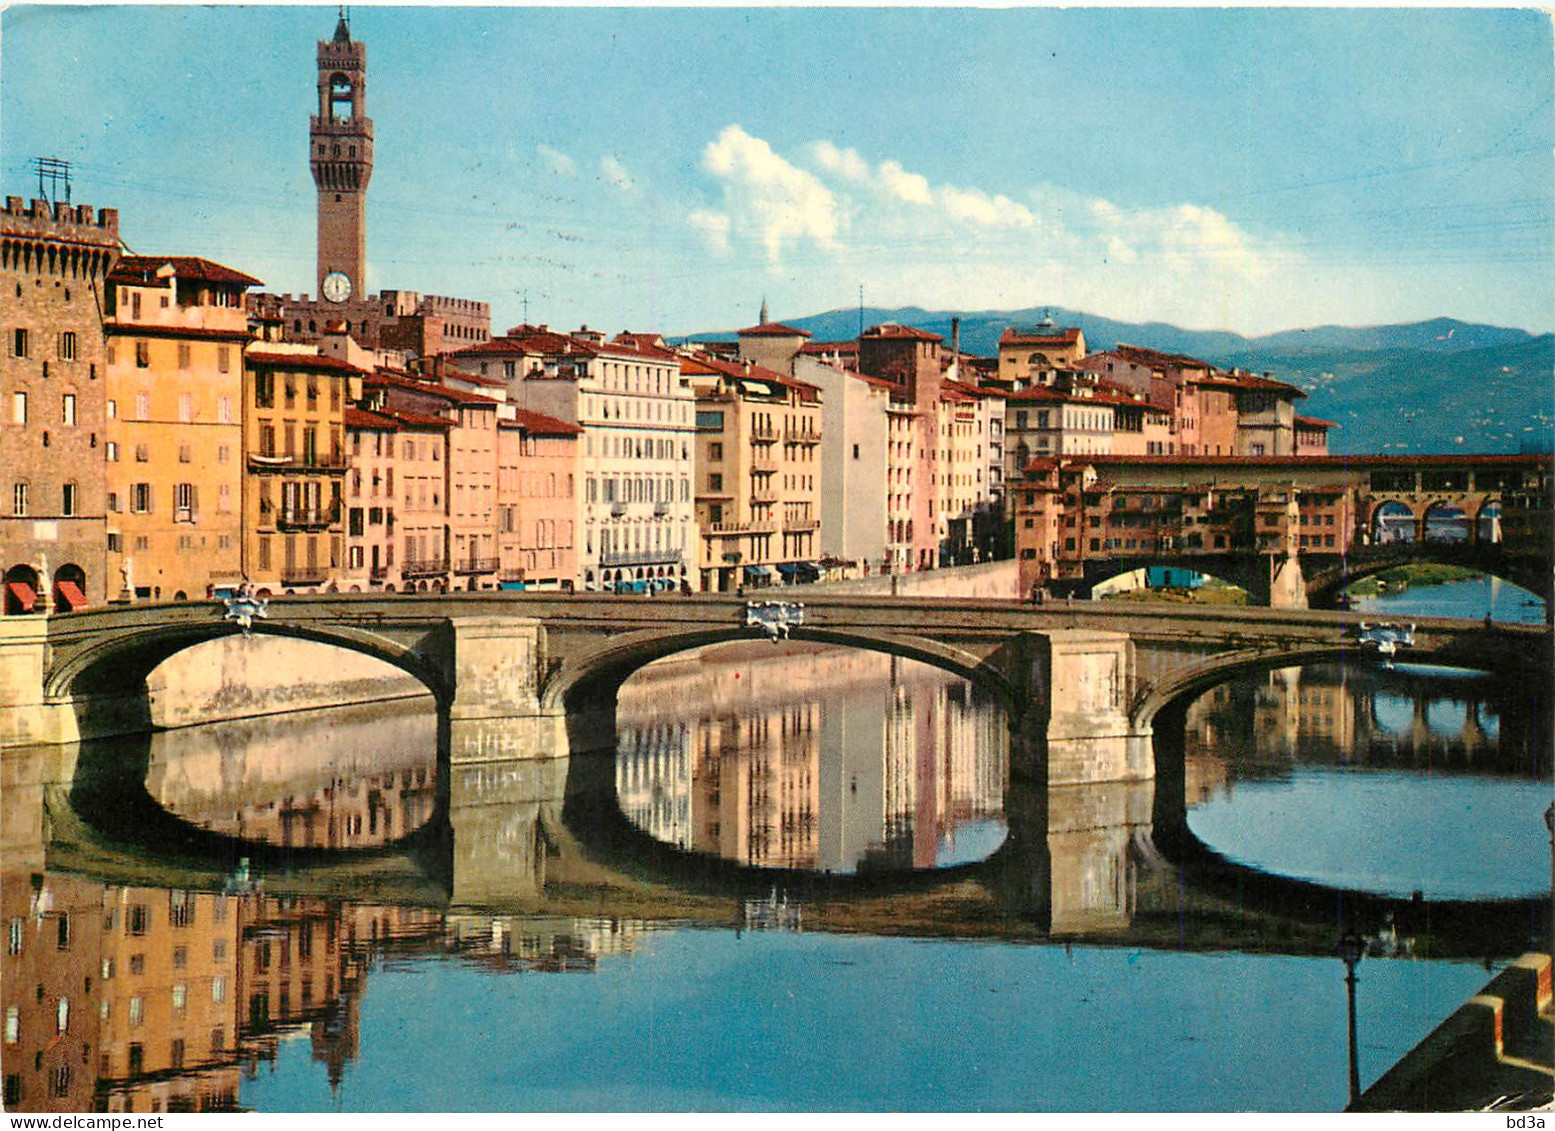 FIRENZE ITALIA - Firenze (Florence)